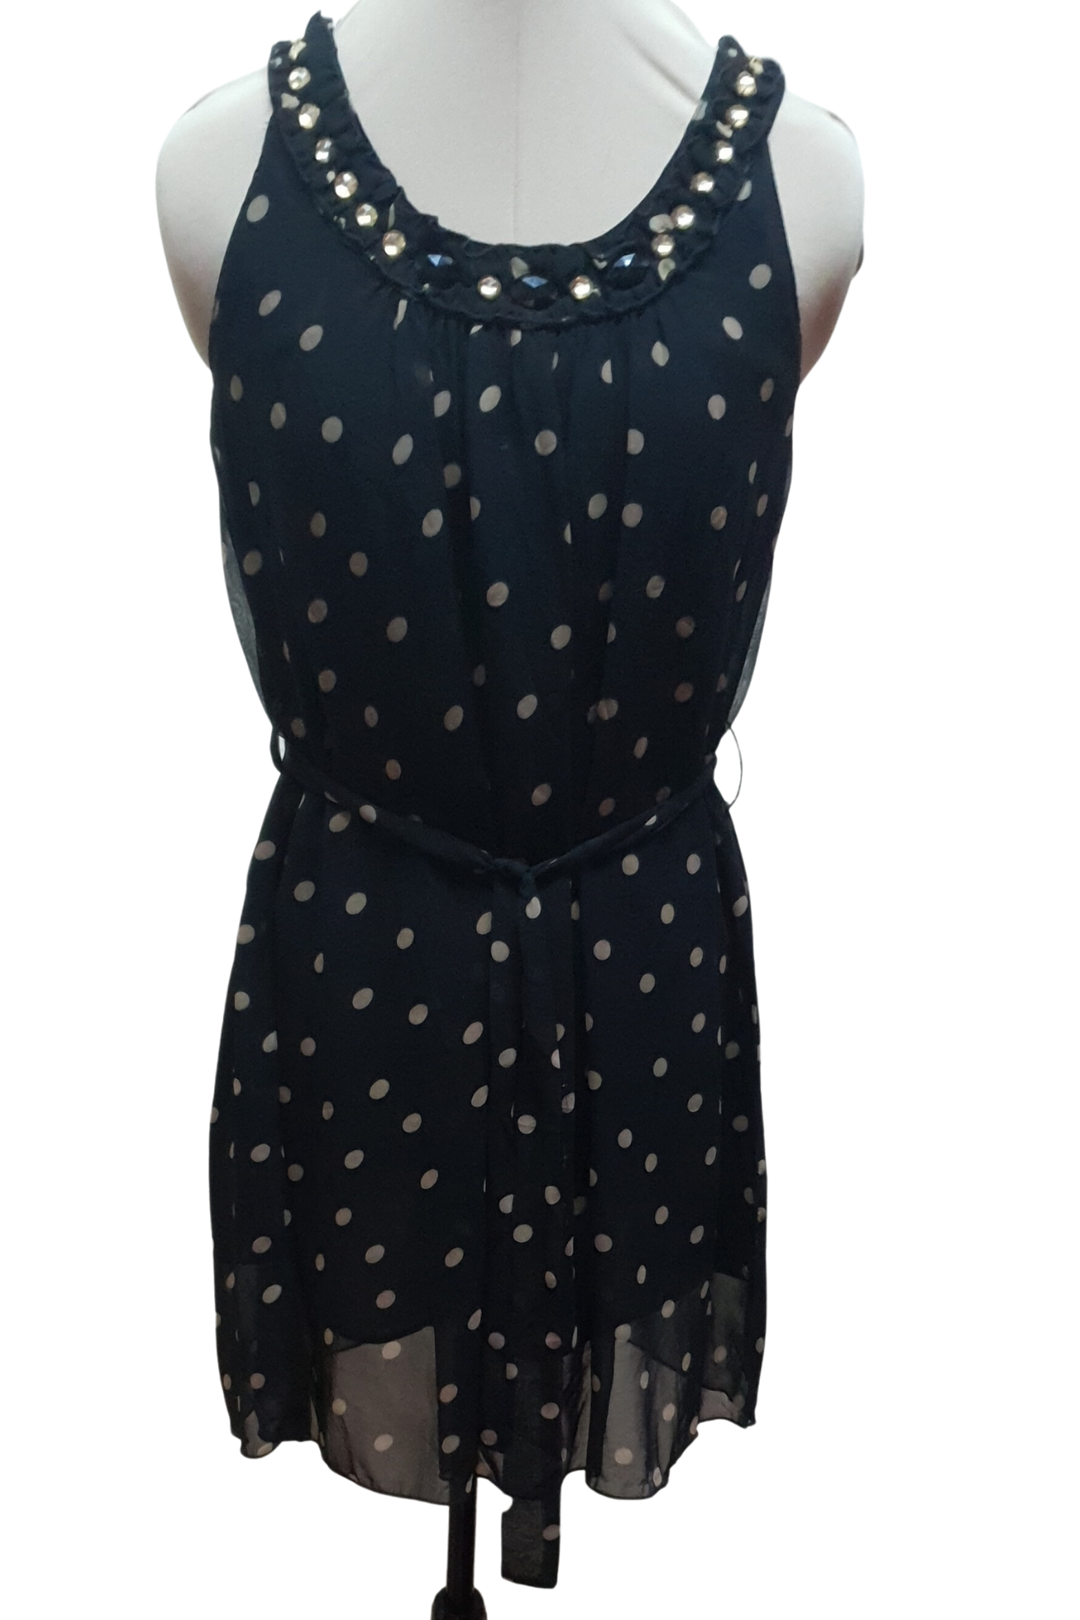 Black Chiffon Short Dress with Gold Dots